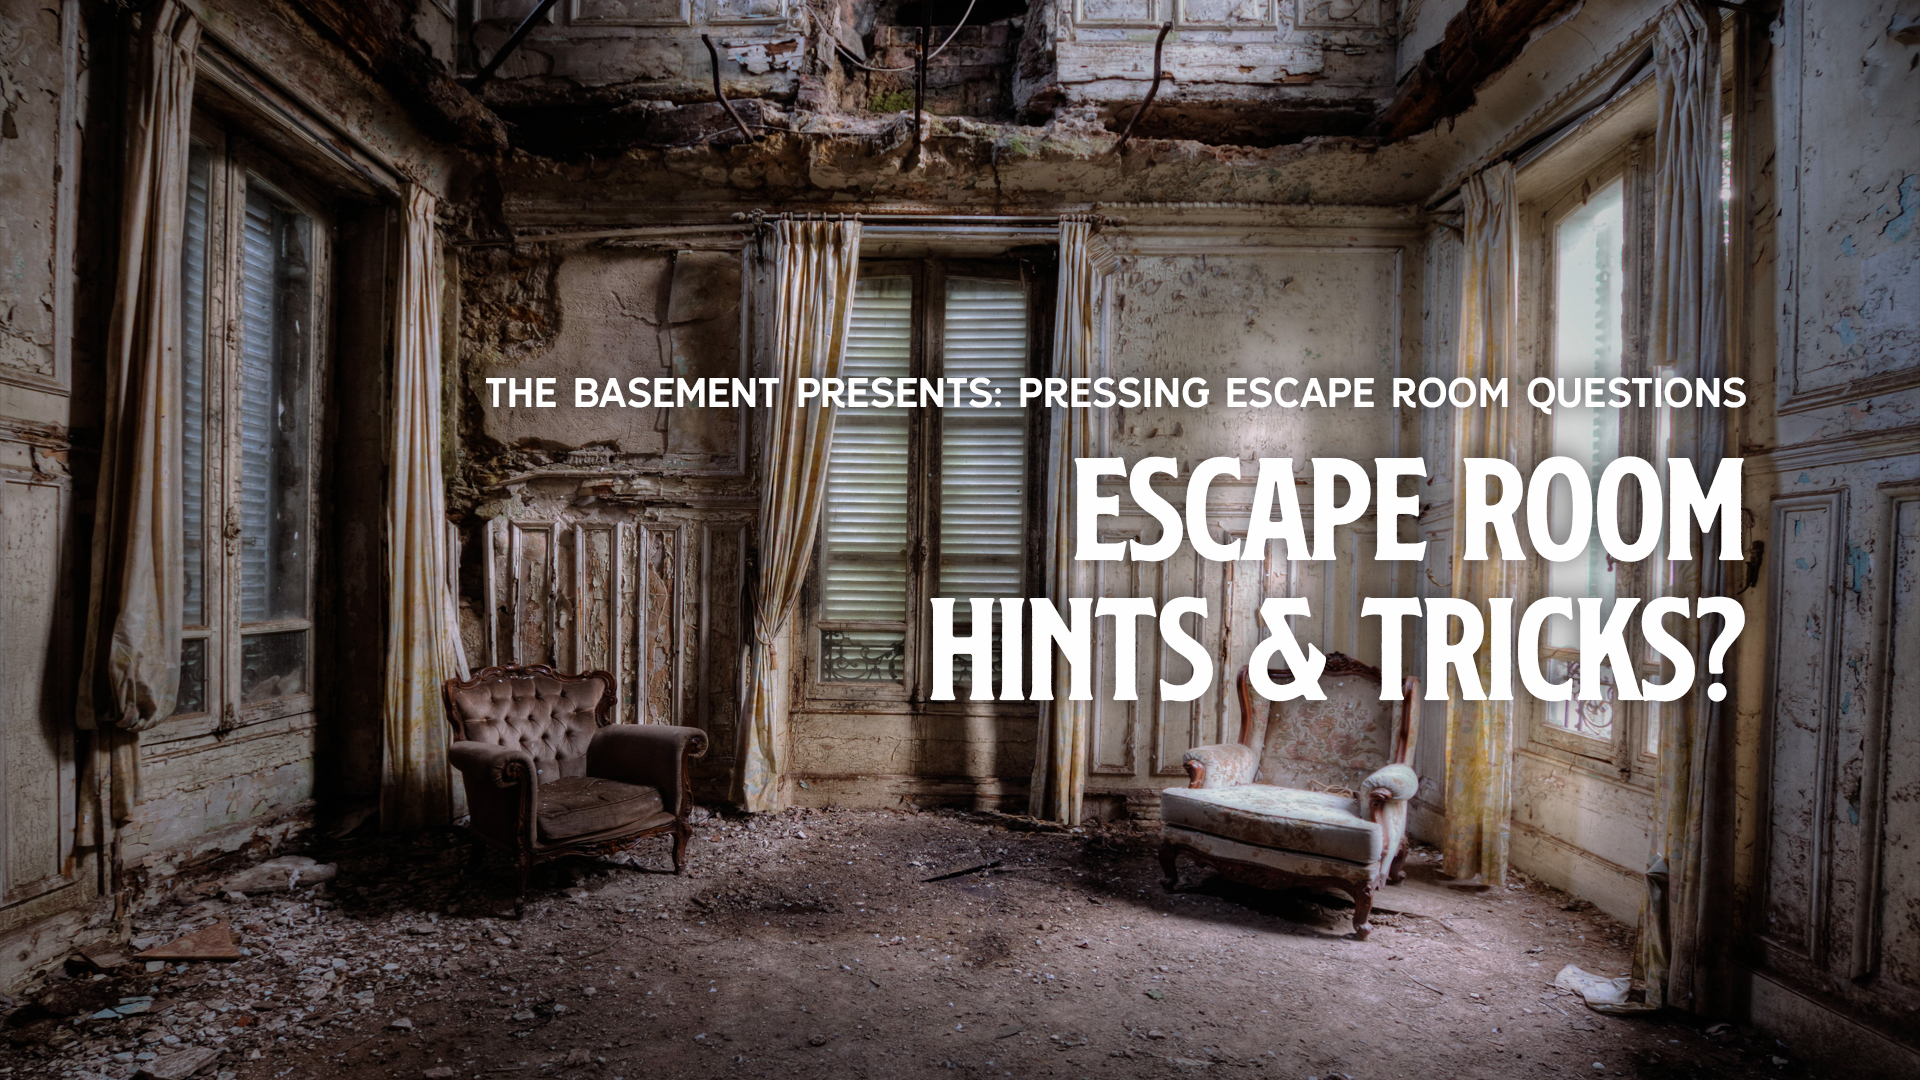 Escape Room Hints and Tricks